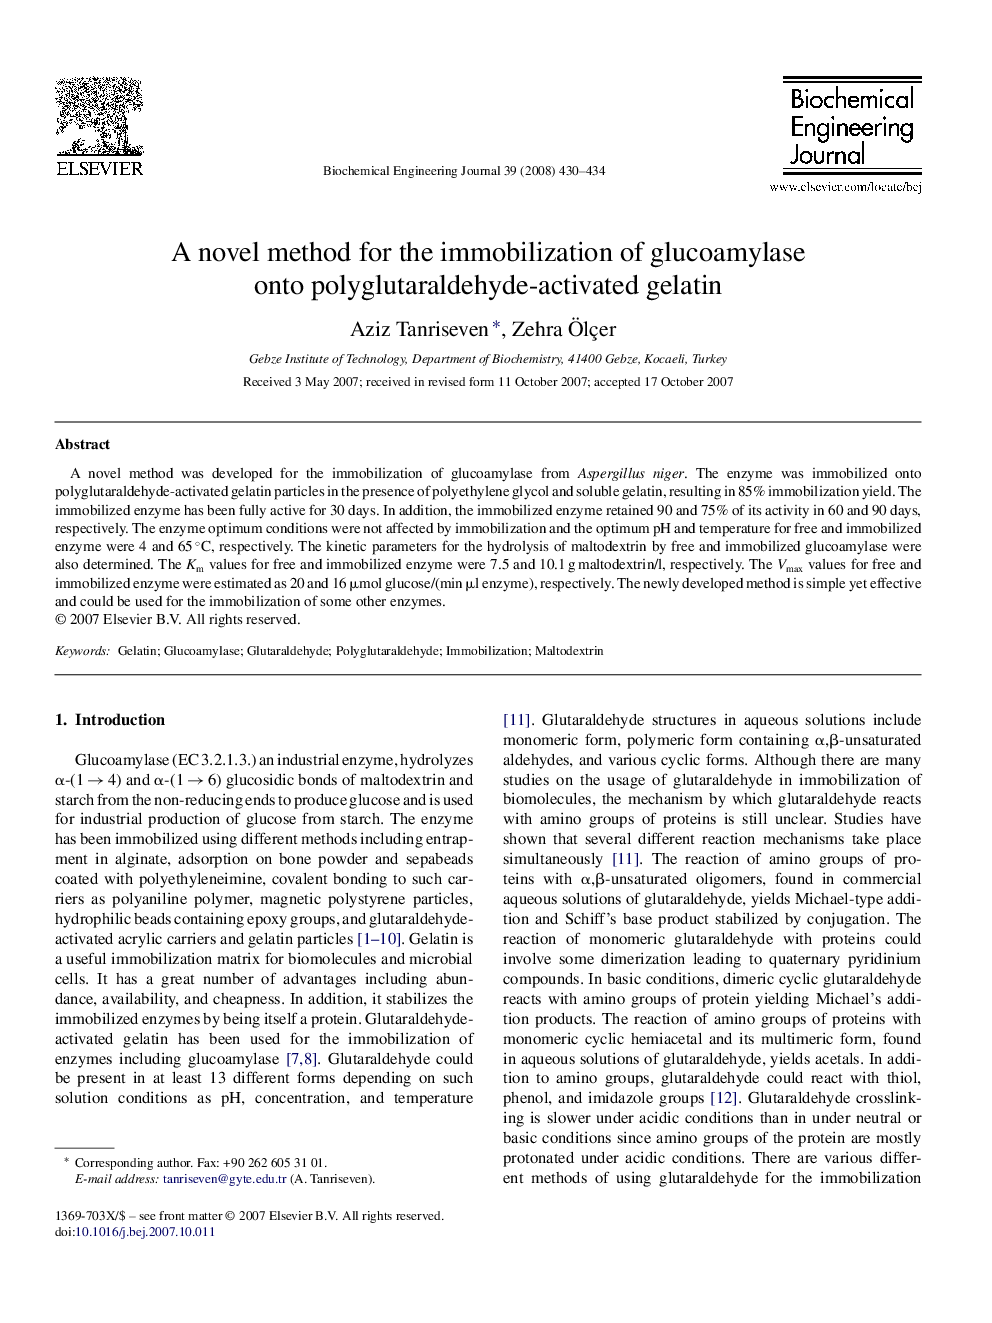 A novel method for the immobilization of glucoamylase onto polyglutaraldehyde-activated gelatin